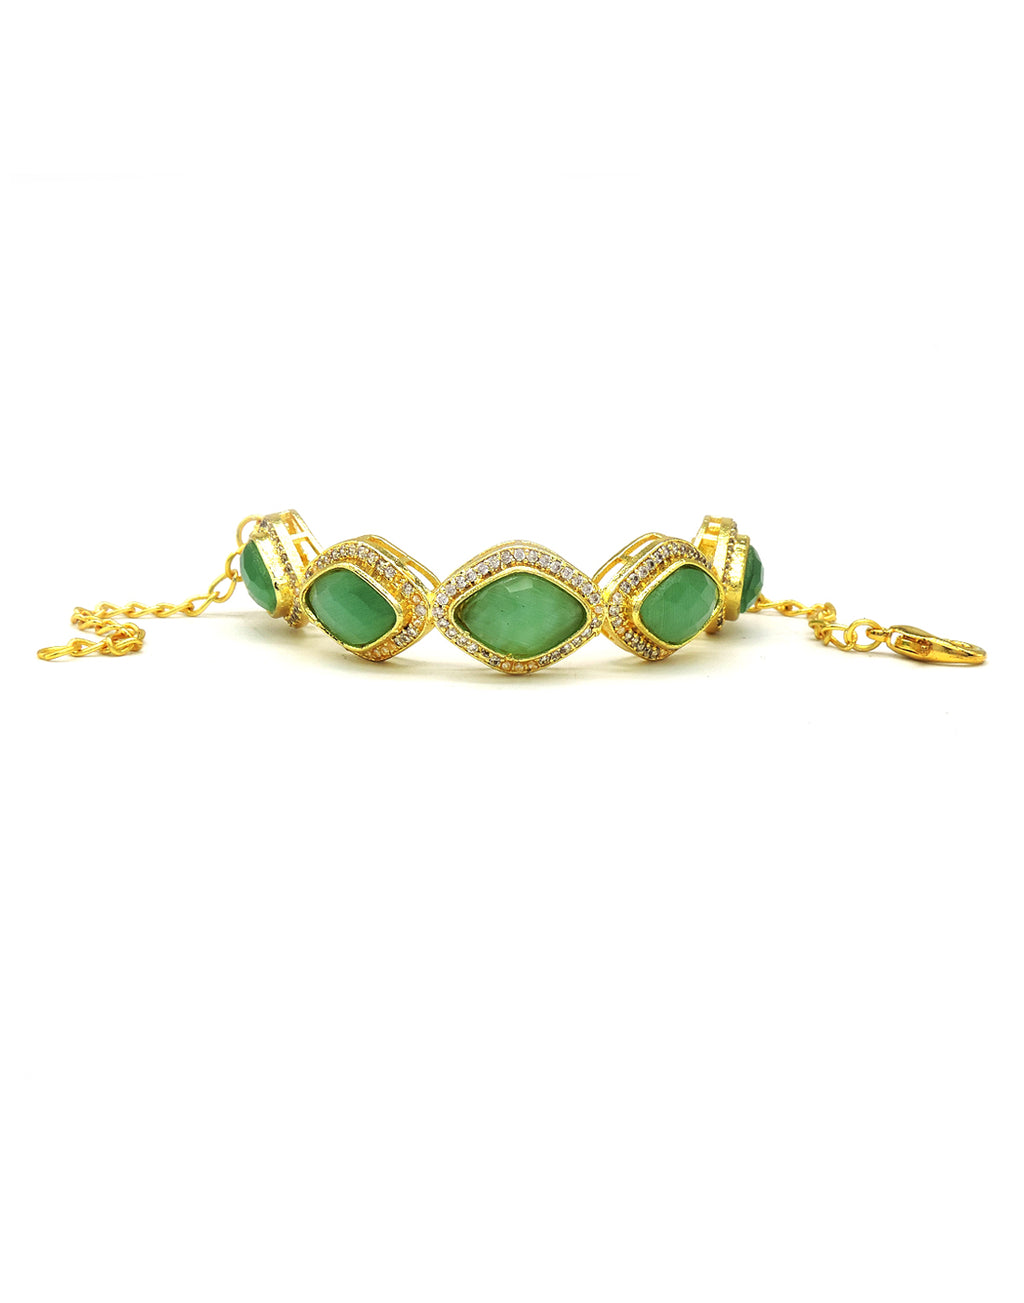 Jewelled Fluorite Bracelet - Statement Bracelets & Cuffs - Gold-Plated & Hypoallergenic Jewellery - Made in India - Dubai Jewellery - Dori